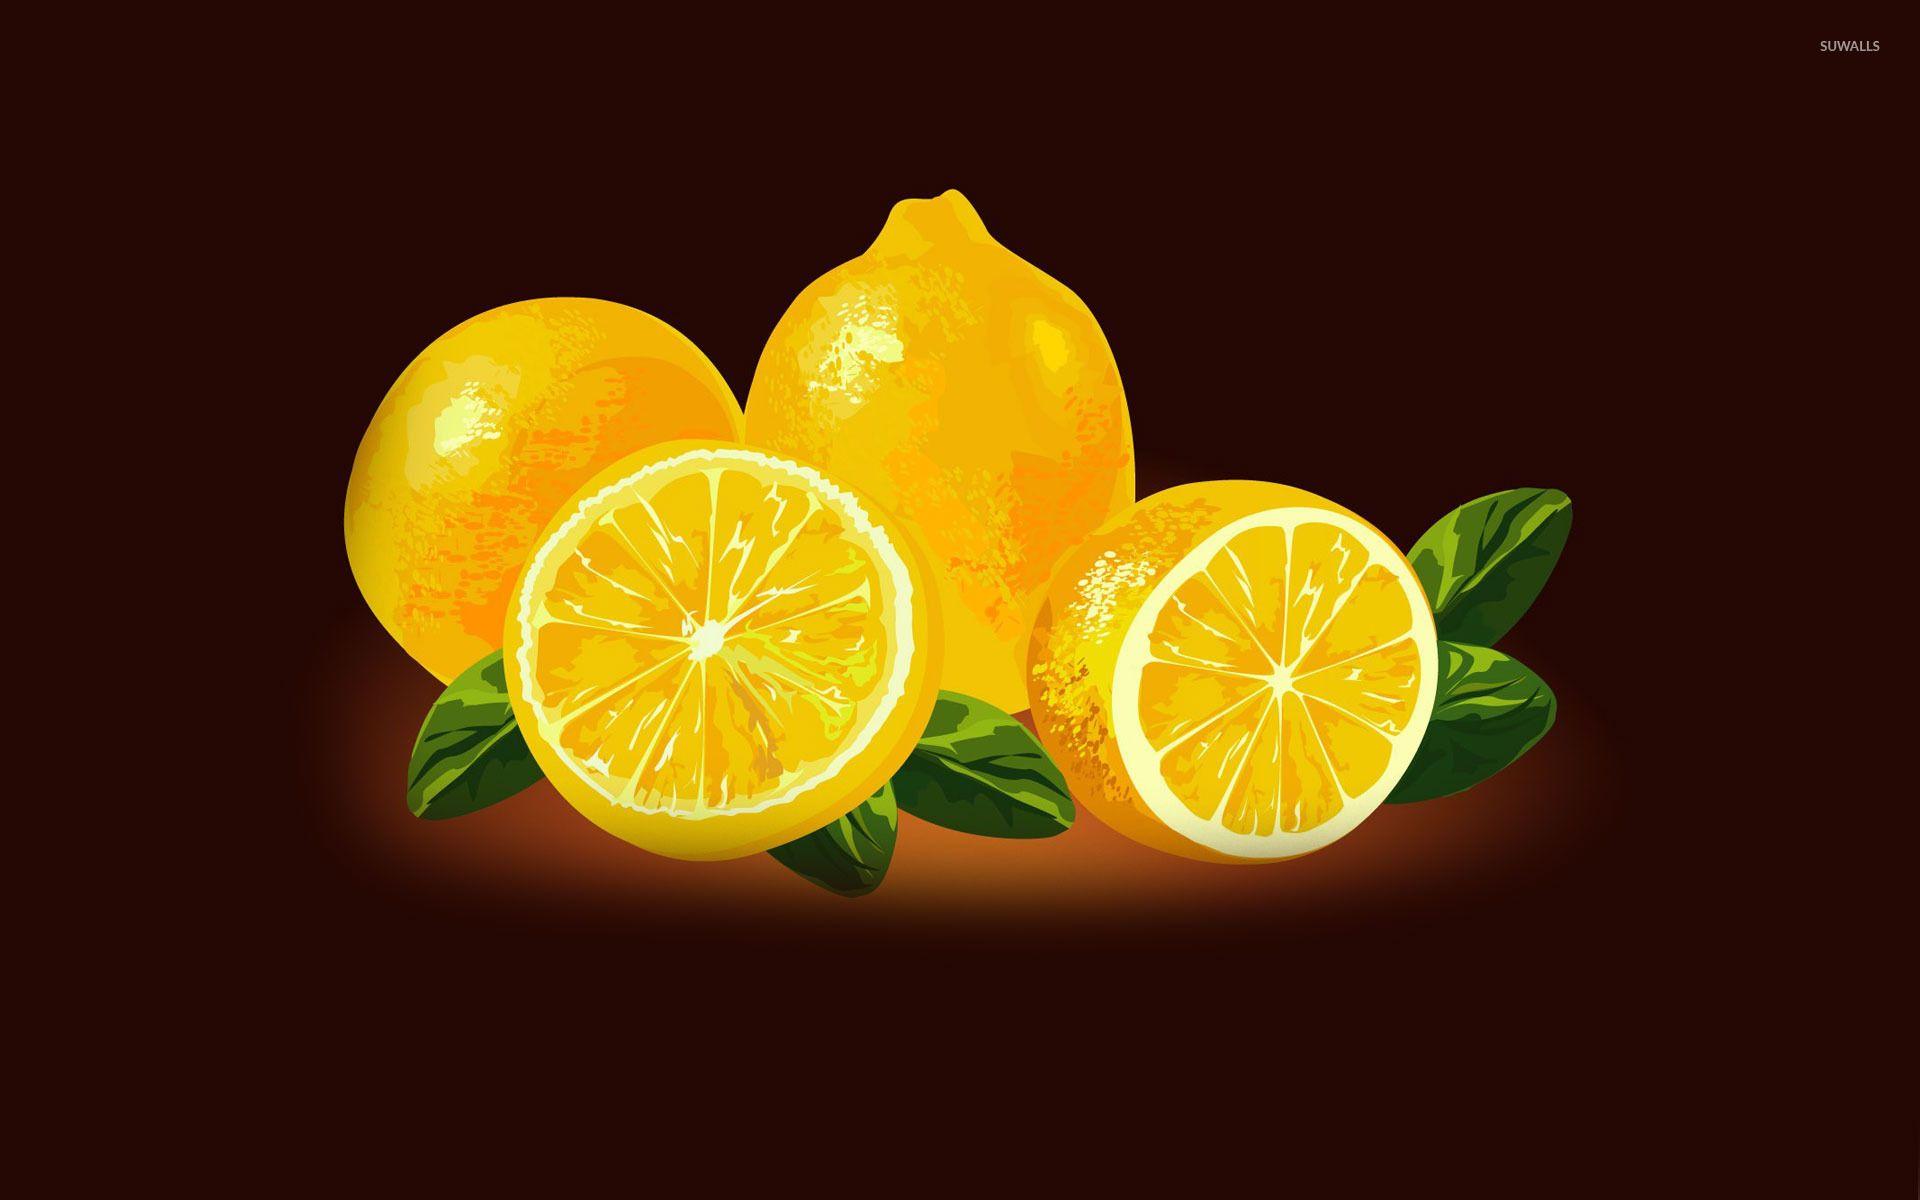 Lemons and Kiwis wallpaper wallpaper